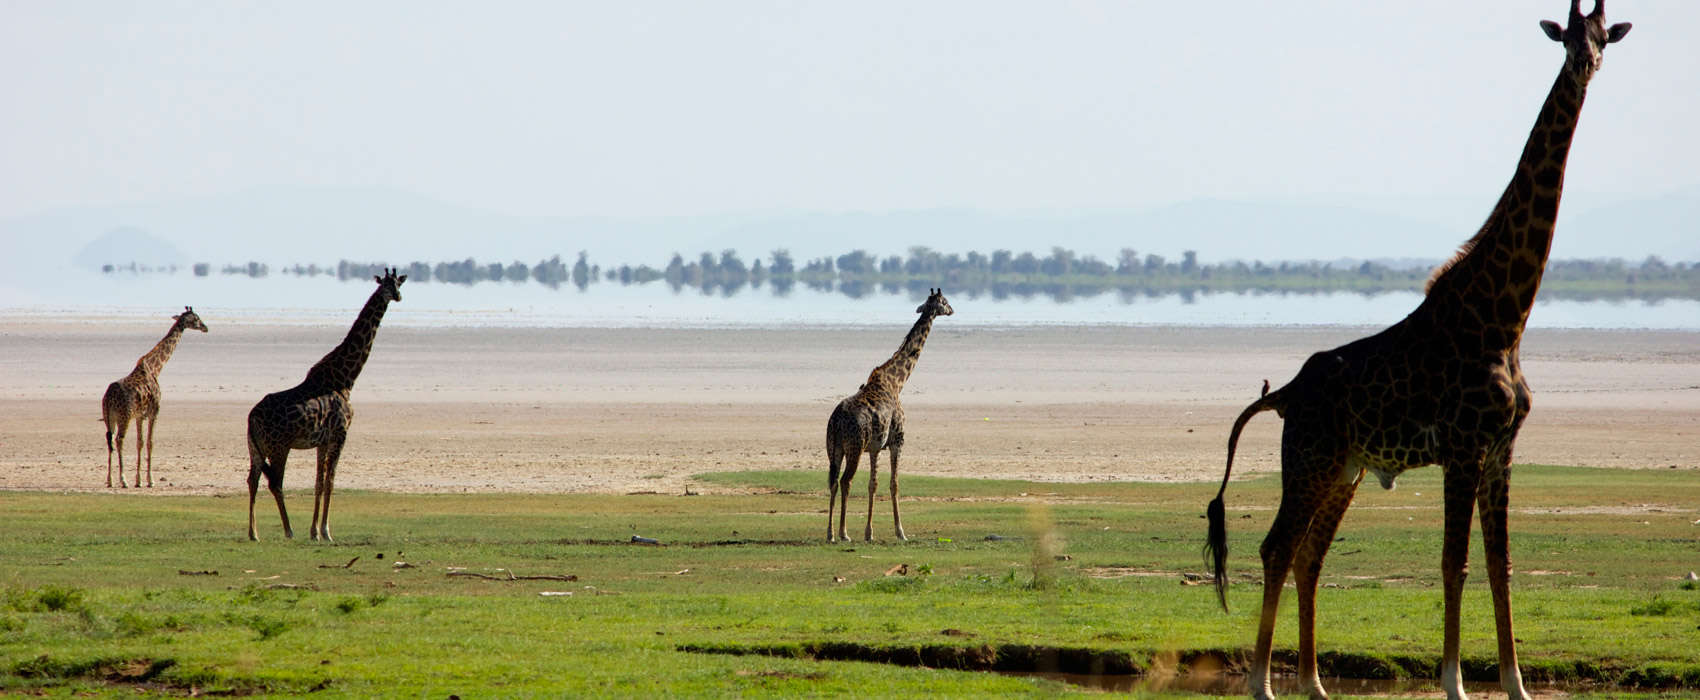 African Lake Manyara National Park Safari giraffe